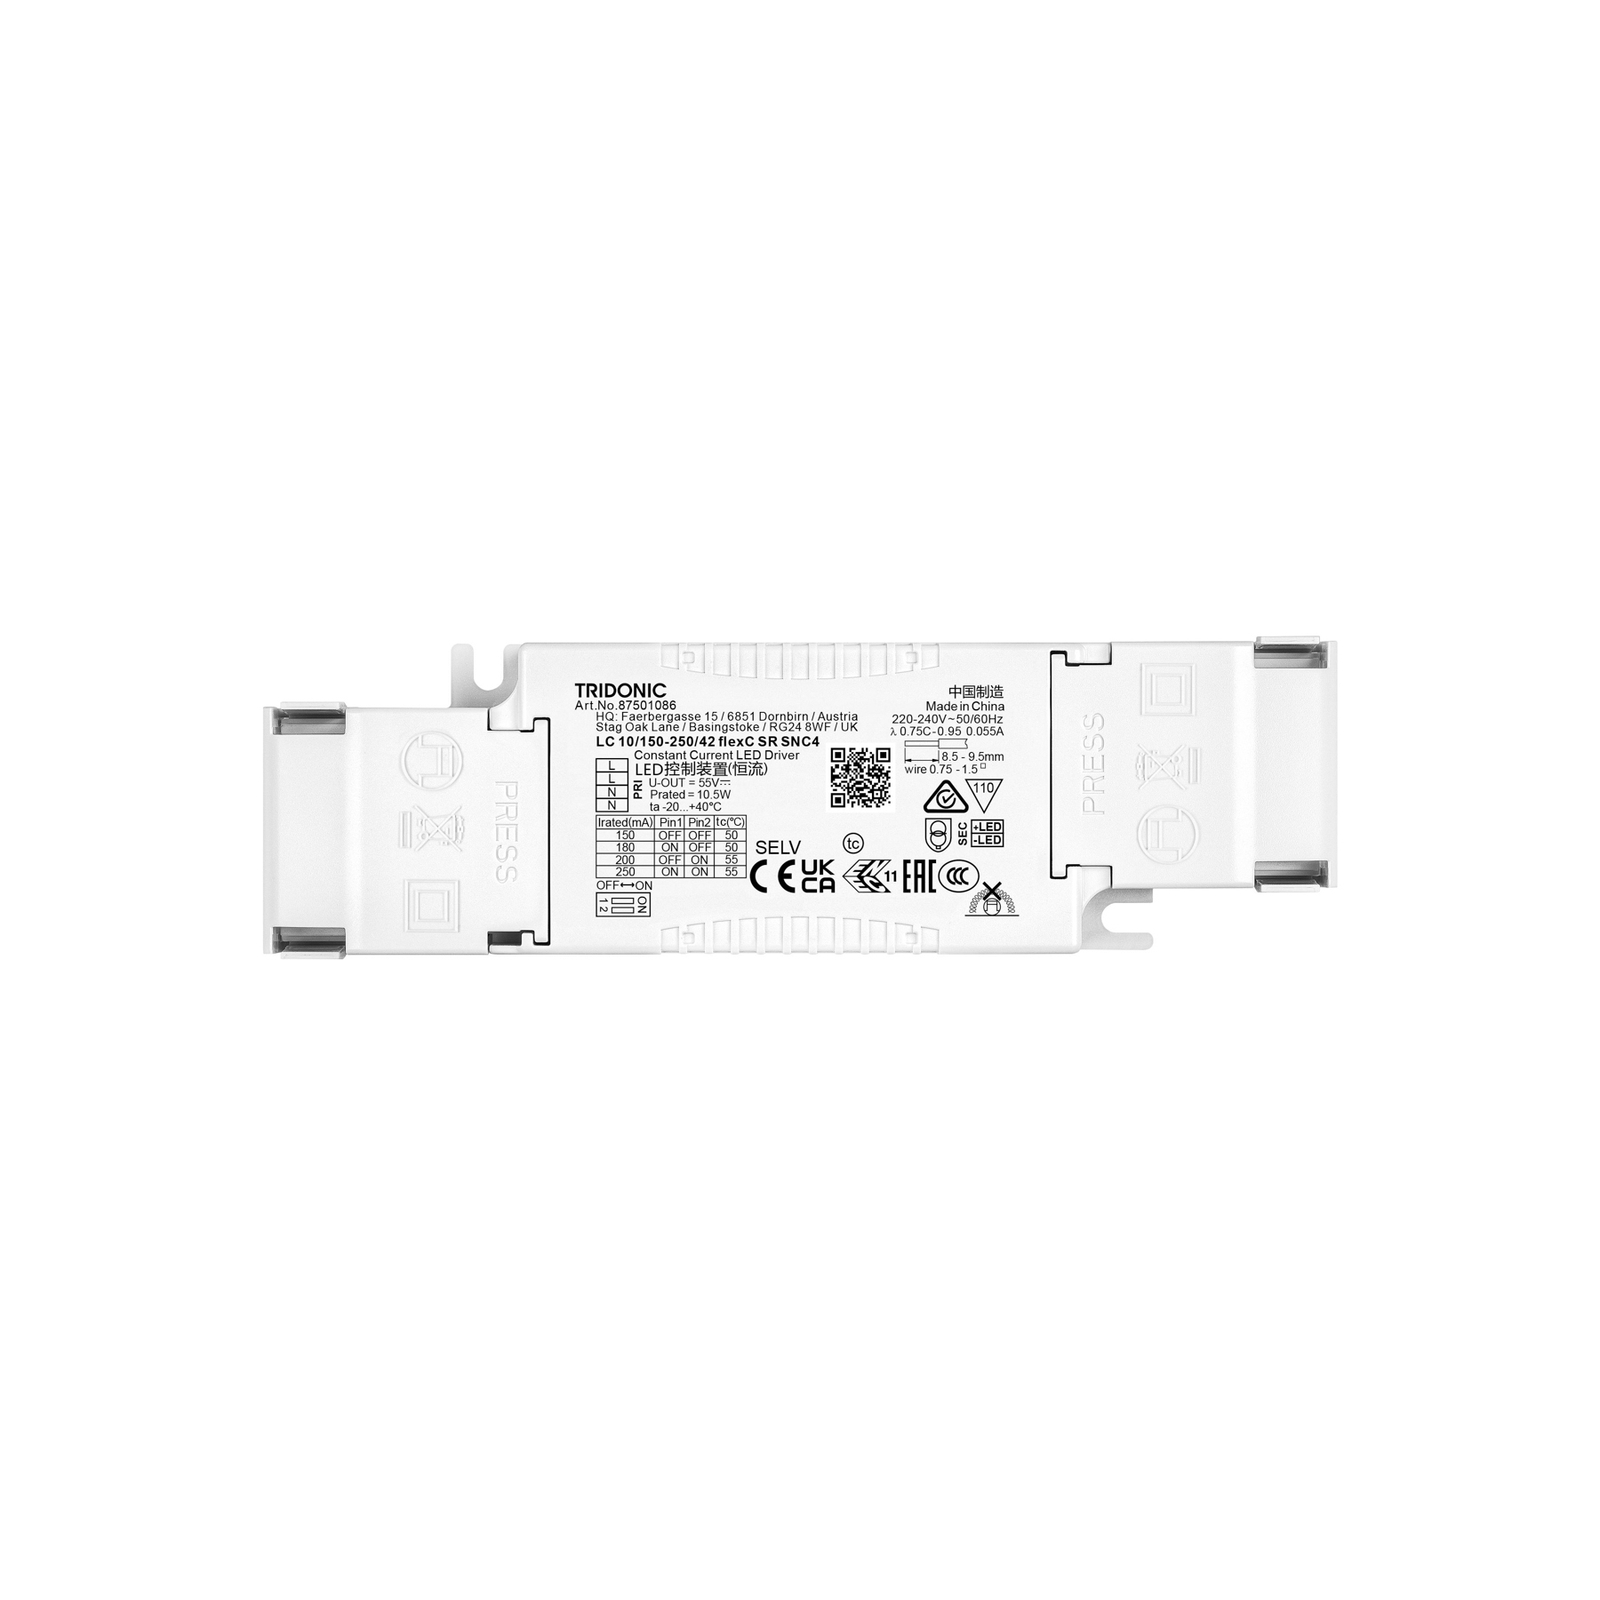 TRIDONIC compacte LED-driver LC 10/150-250/42 flexC SR SNC4